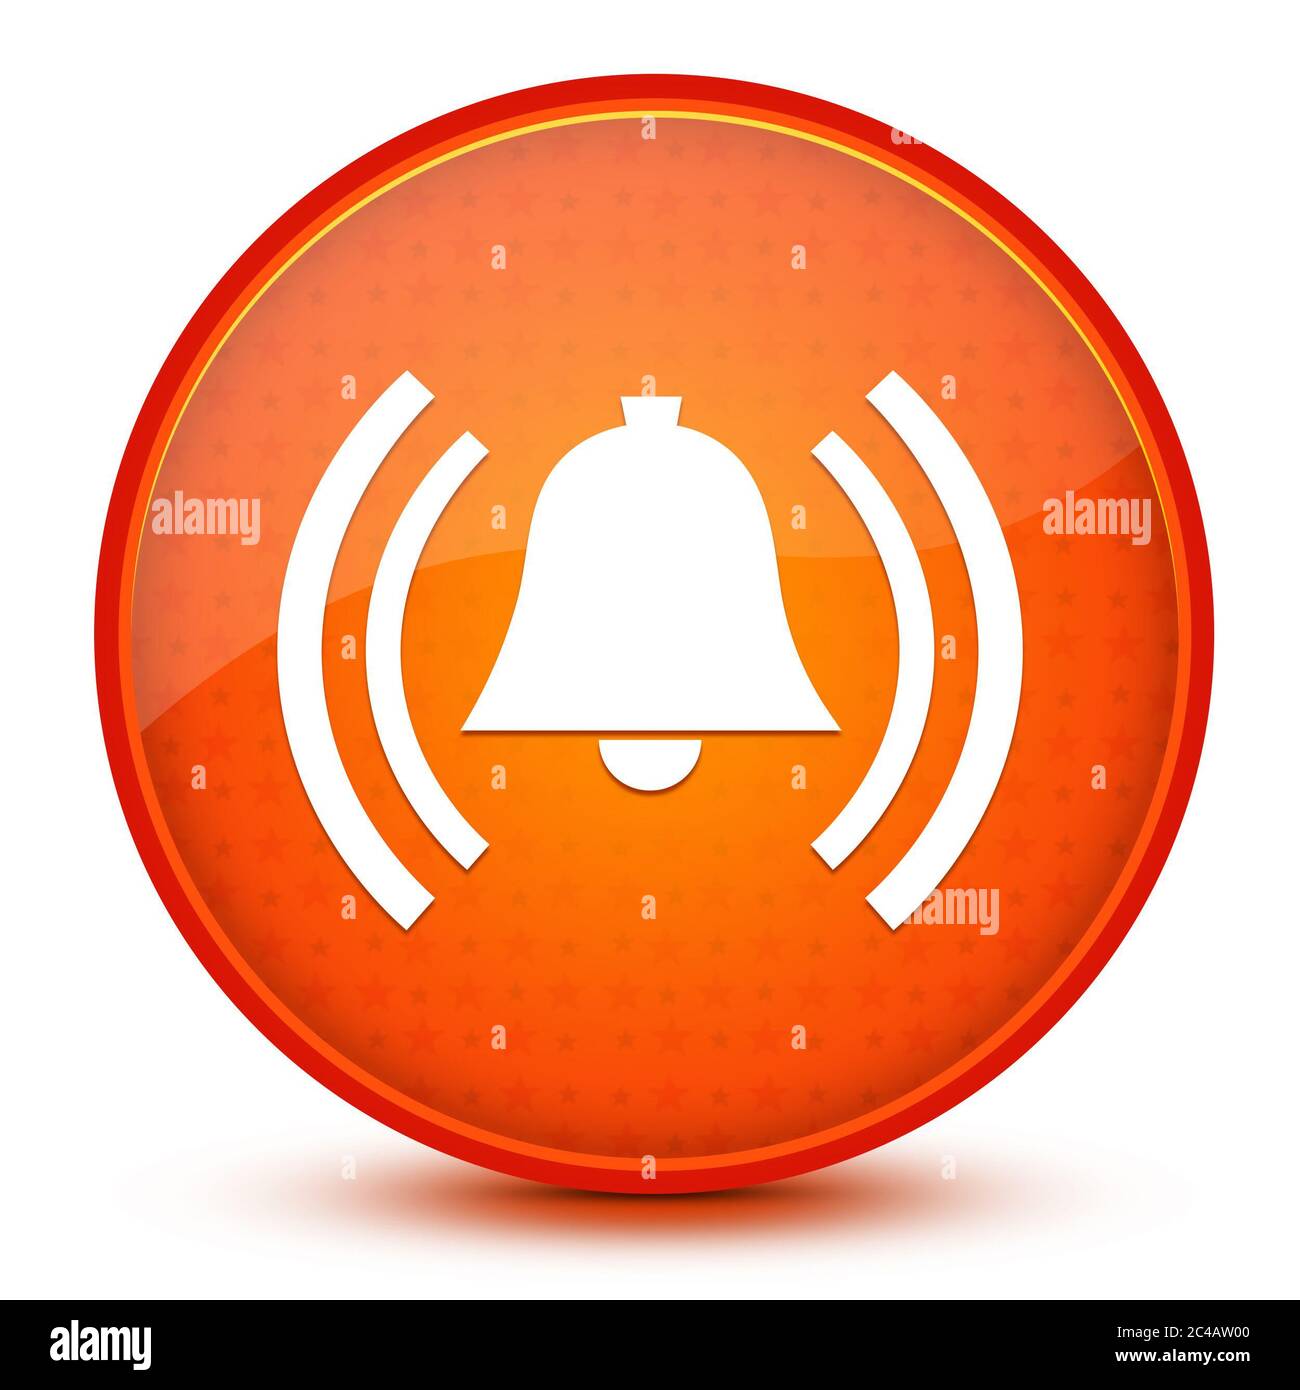 Alarm icon isolated on glossy star orange round button illustration Stock Photo